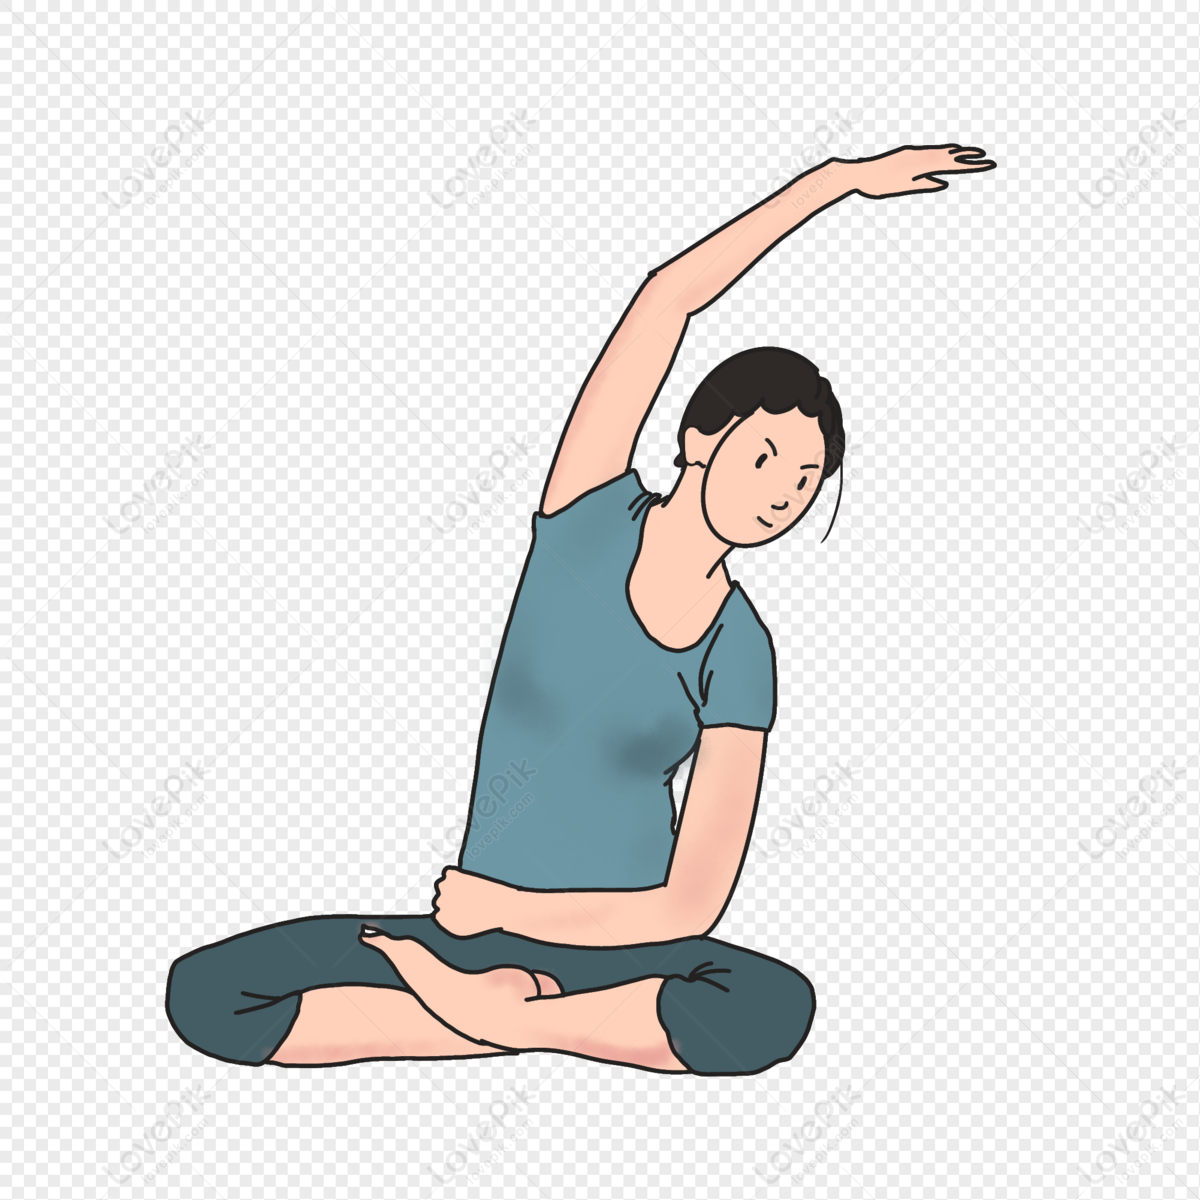 Yoga silhouette (26765) Free AI Download / 4 Vector